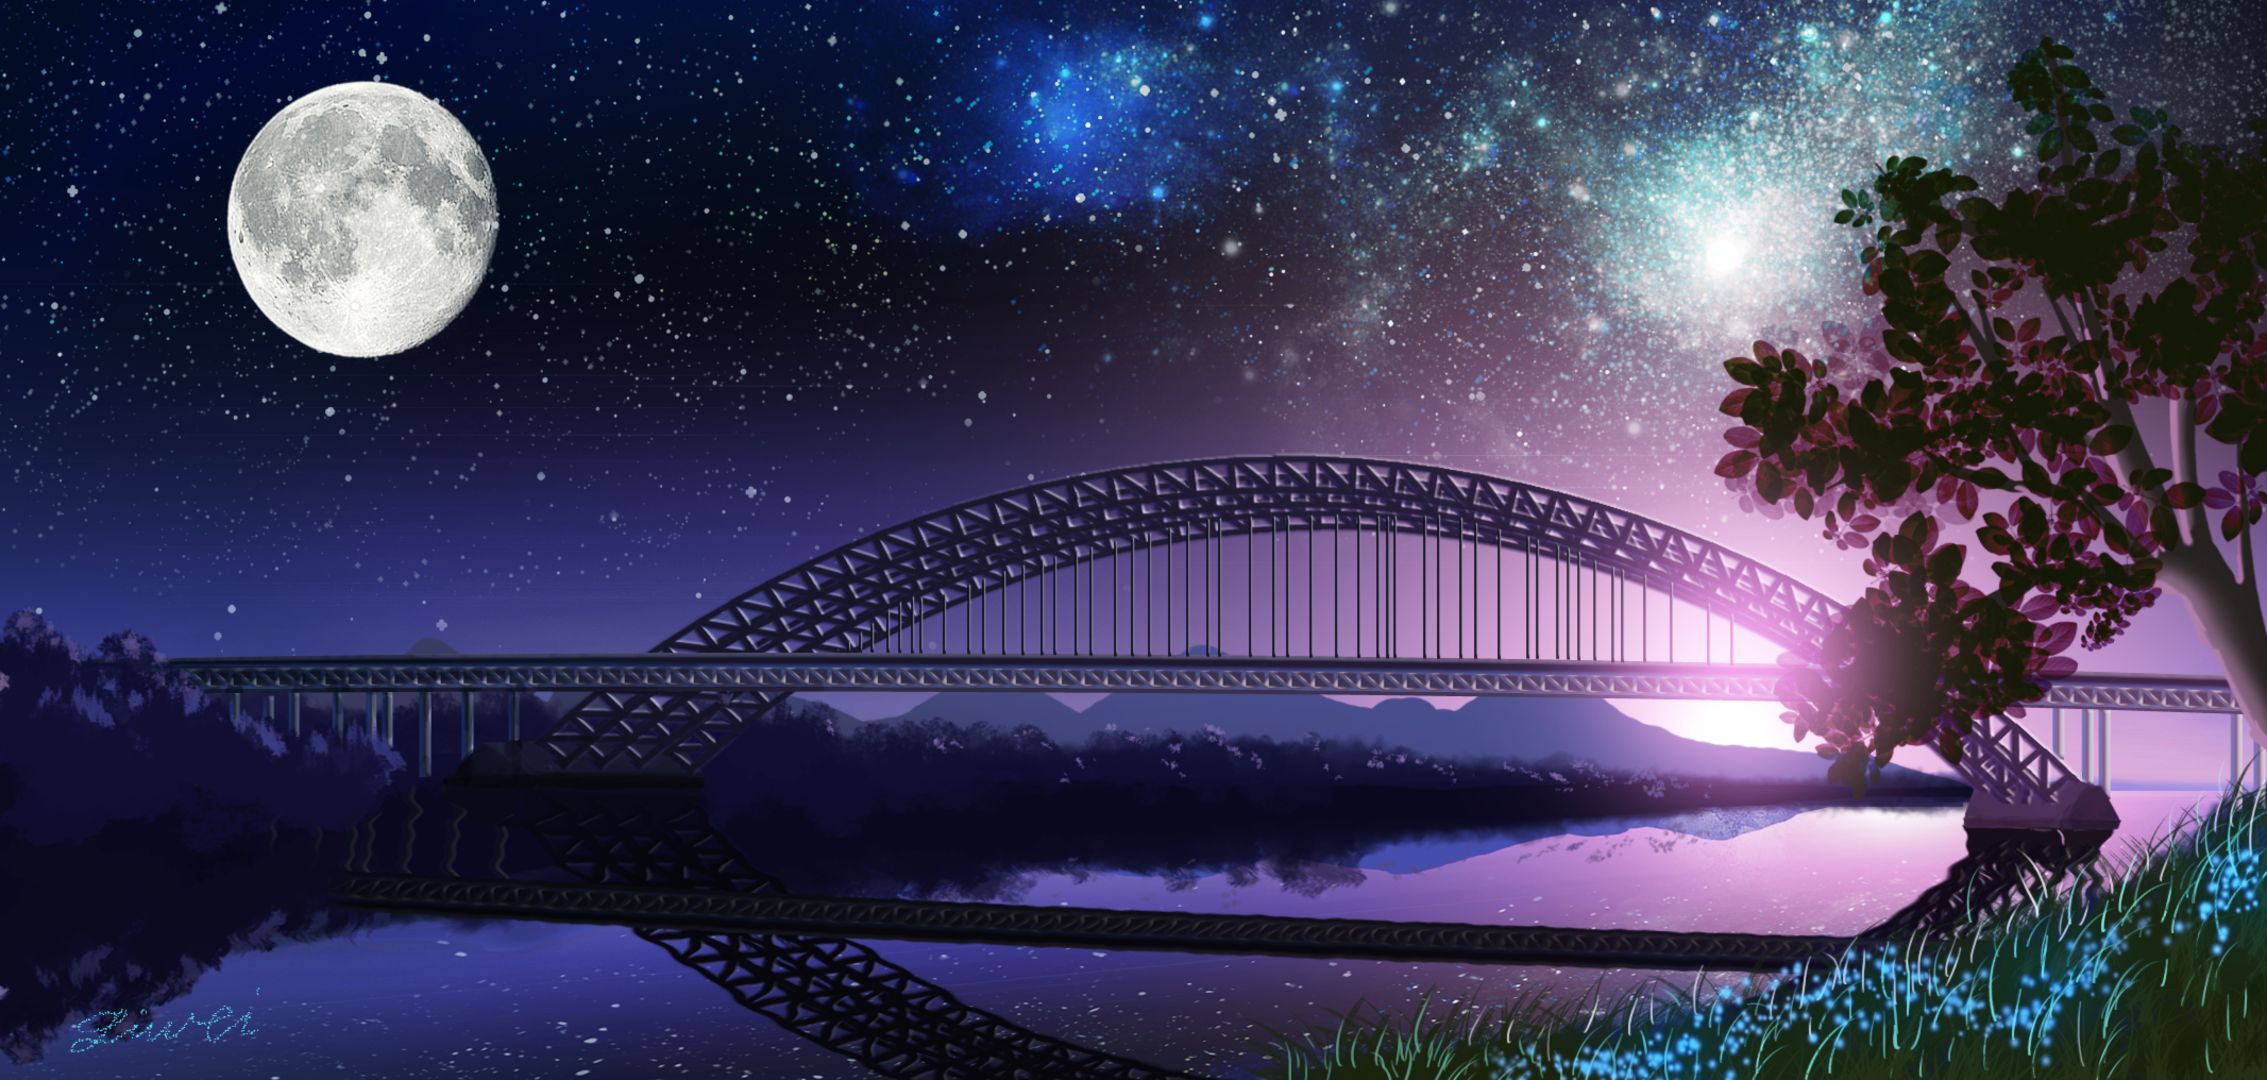 Download free Anime Scenery Foot Bridge Wallpaper - MrWallpaper.com